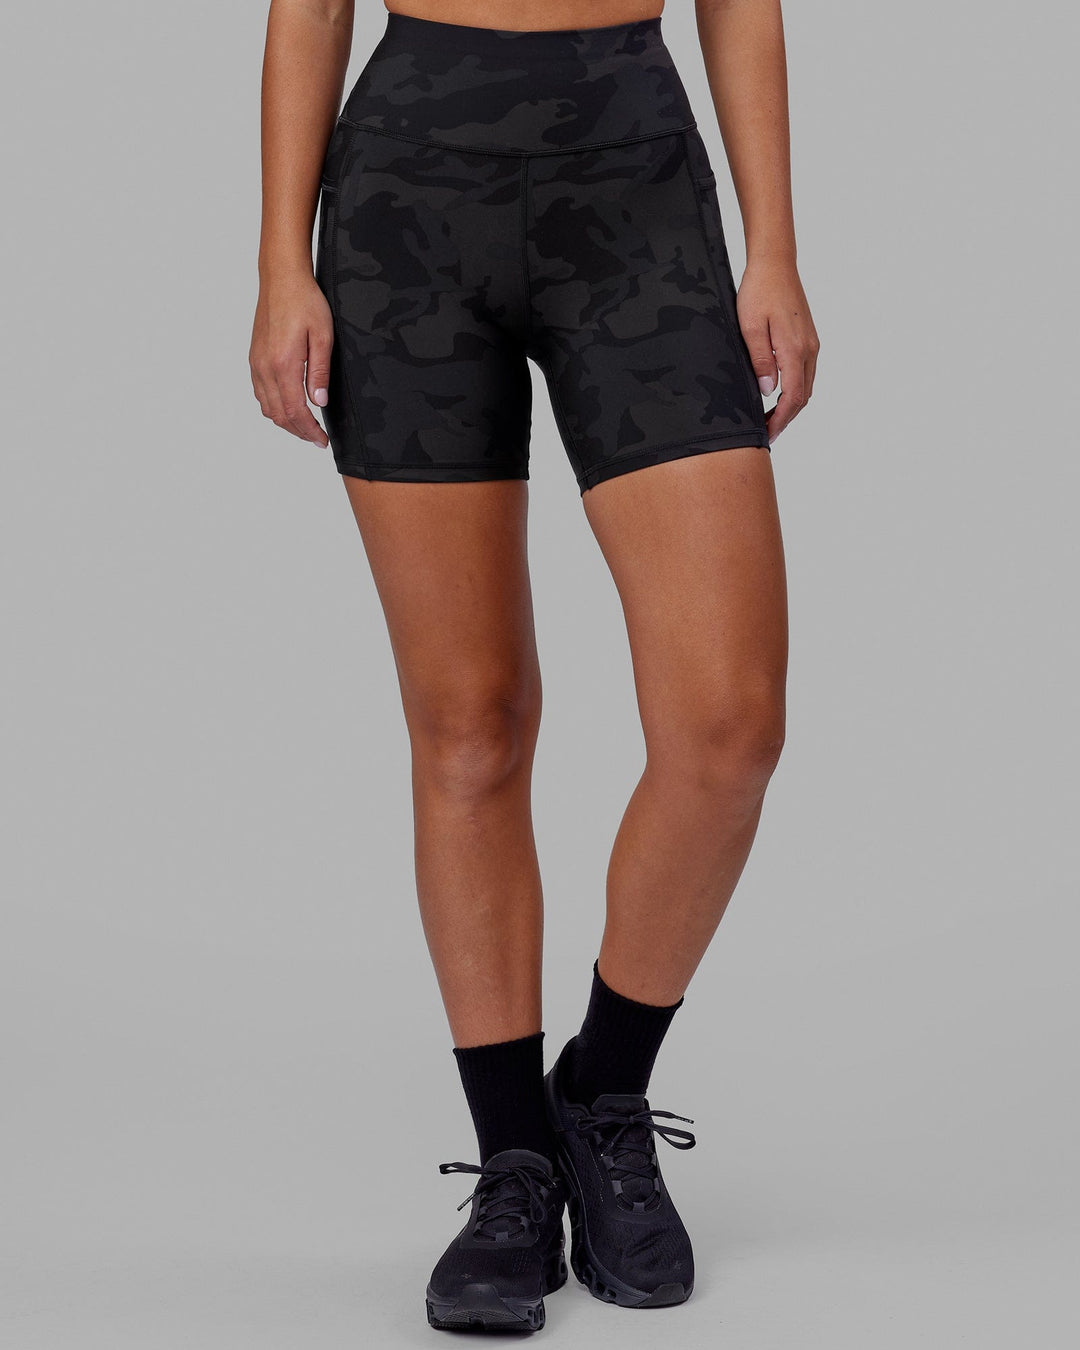 Rep Mid-Length Shorts - Black Camo